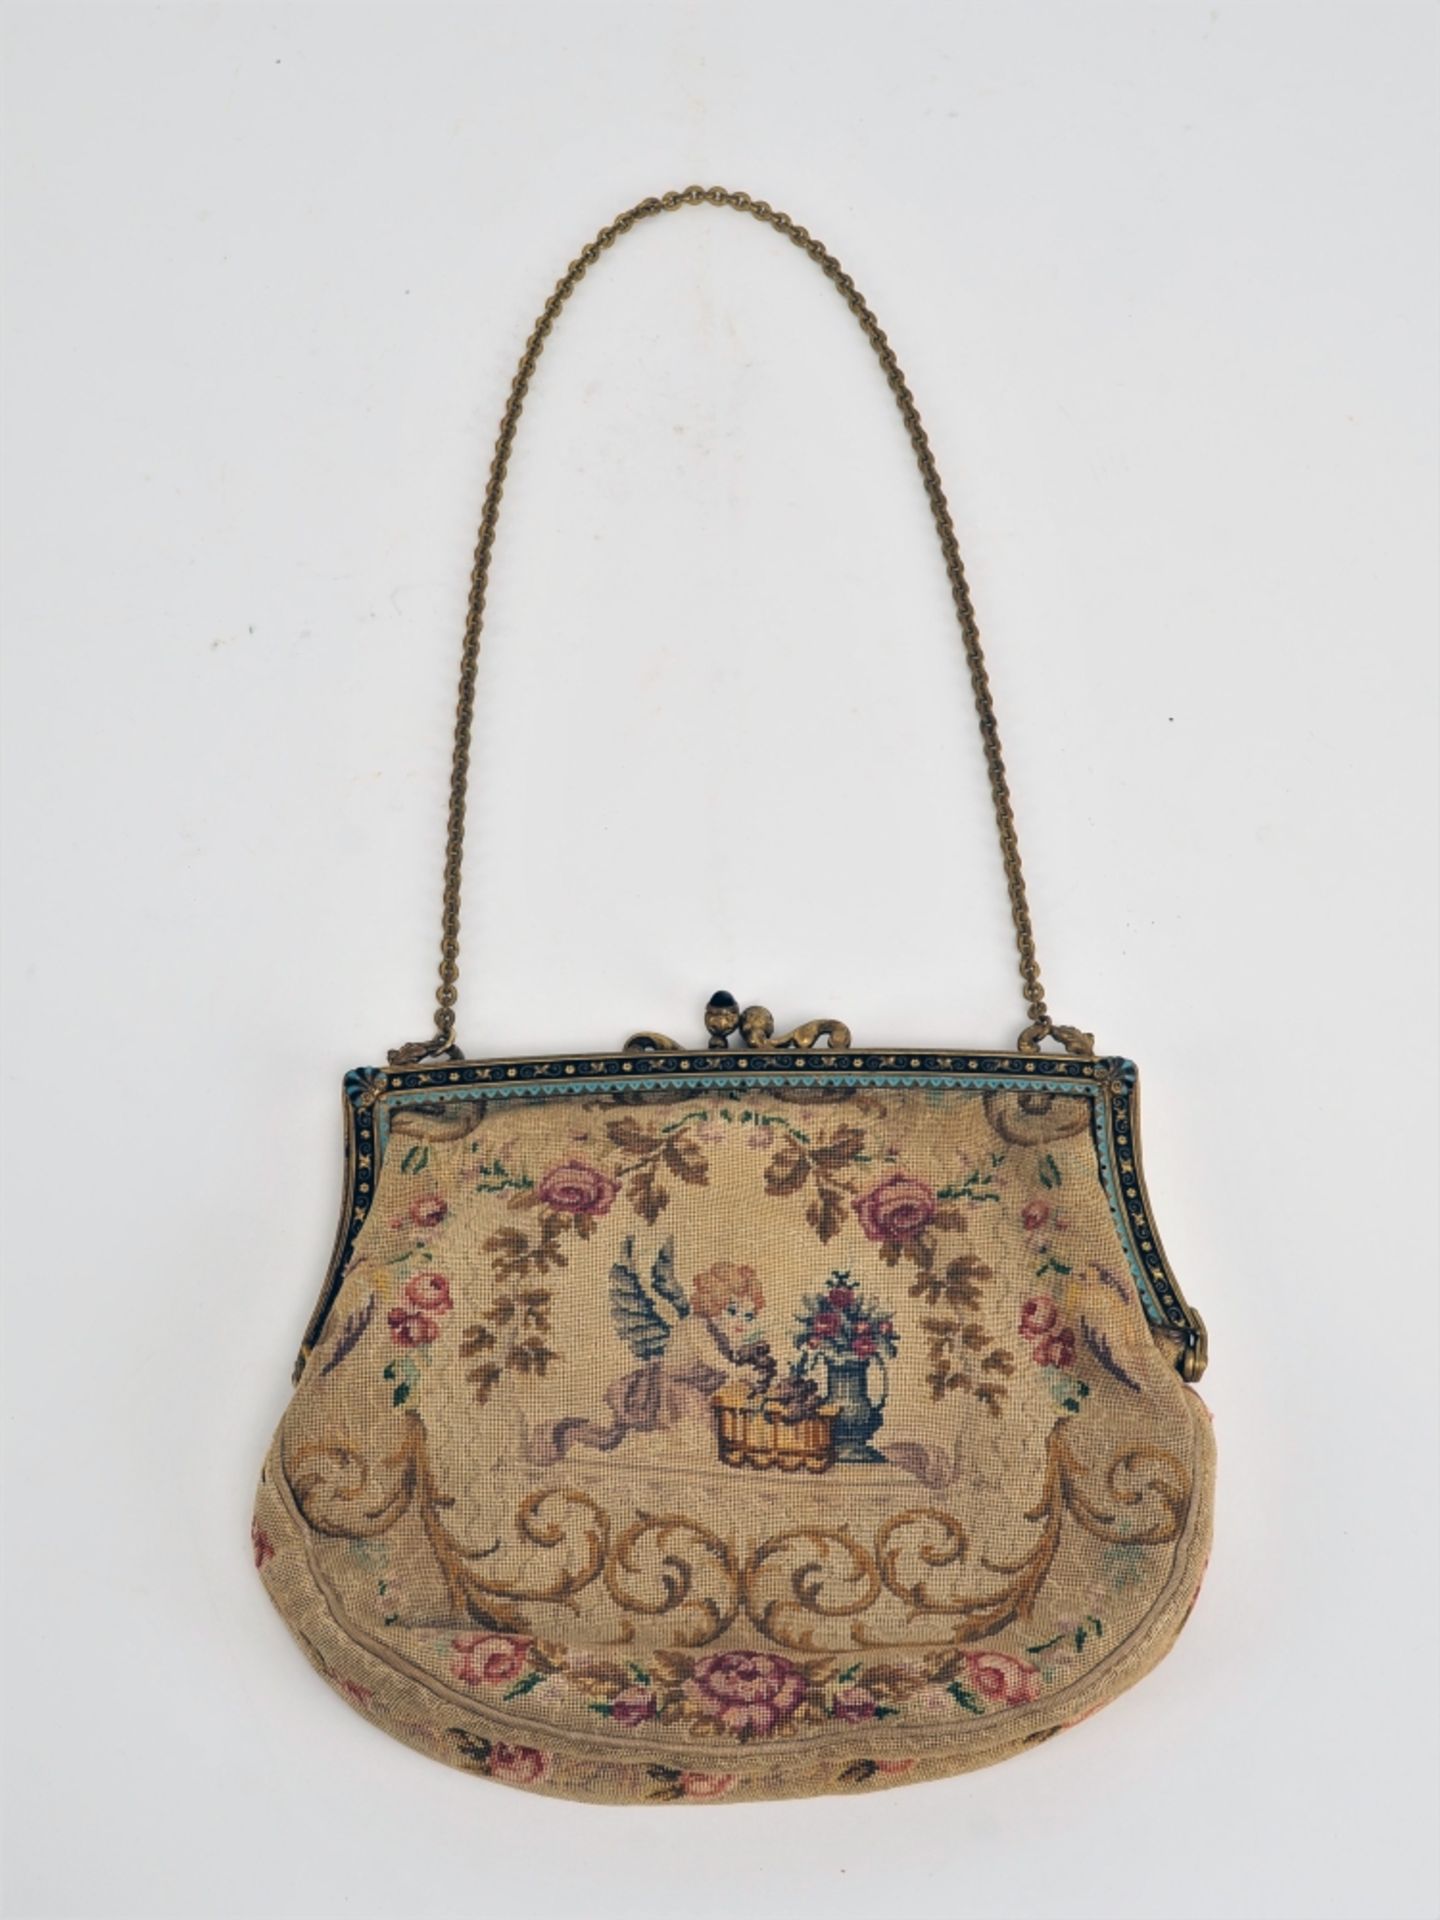 Ladies handbag around 1900